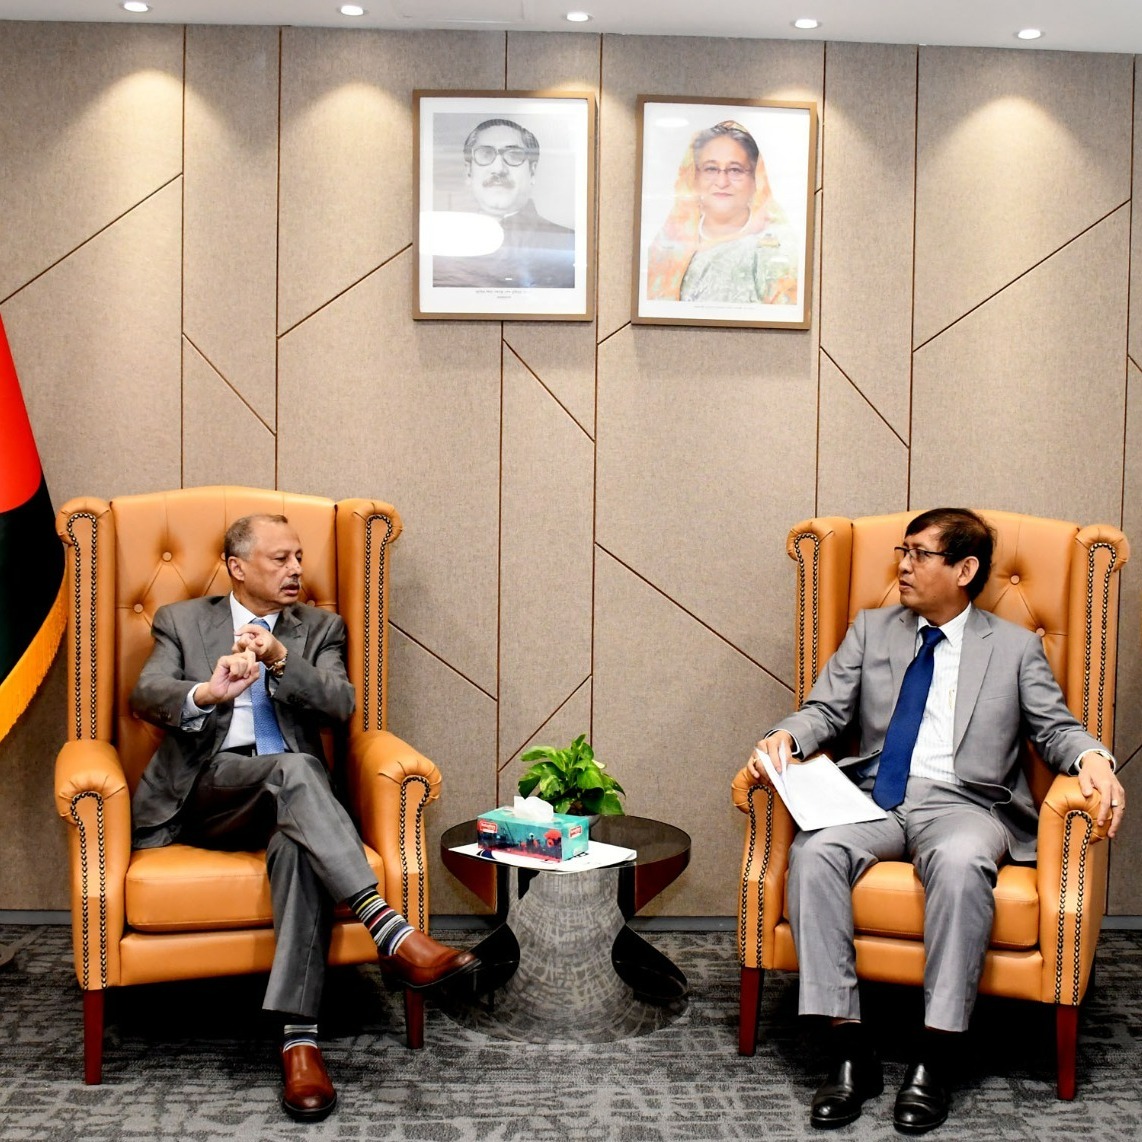 Urge to strengthen commercial relations between Bangladesh and Myanmar